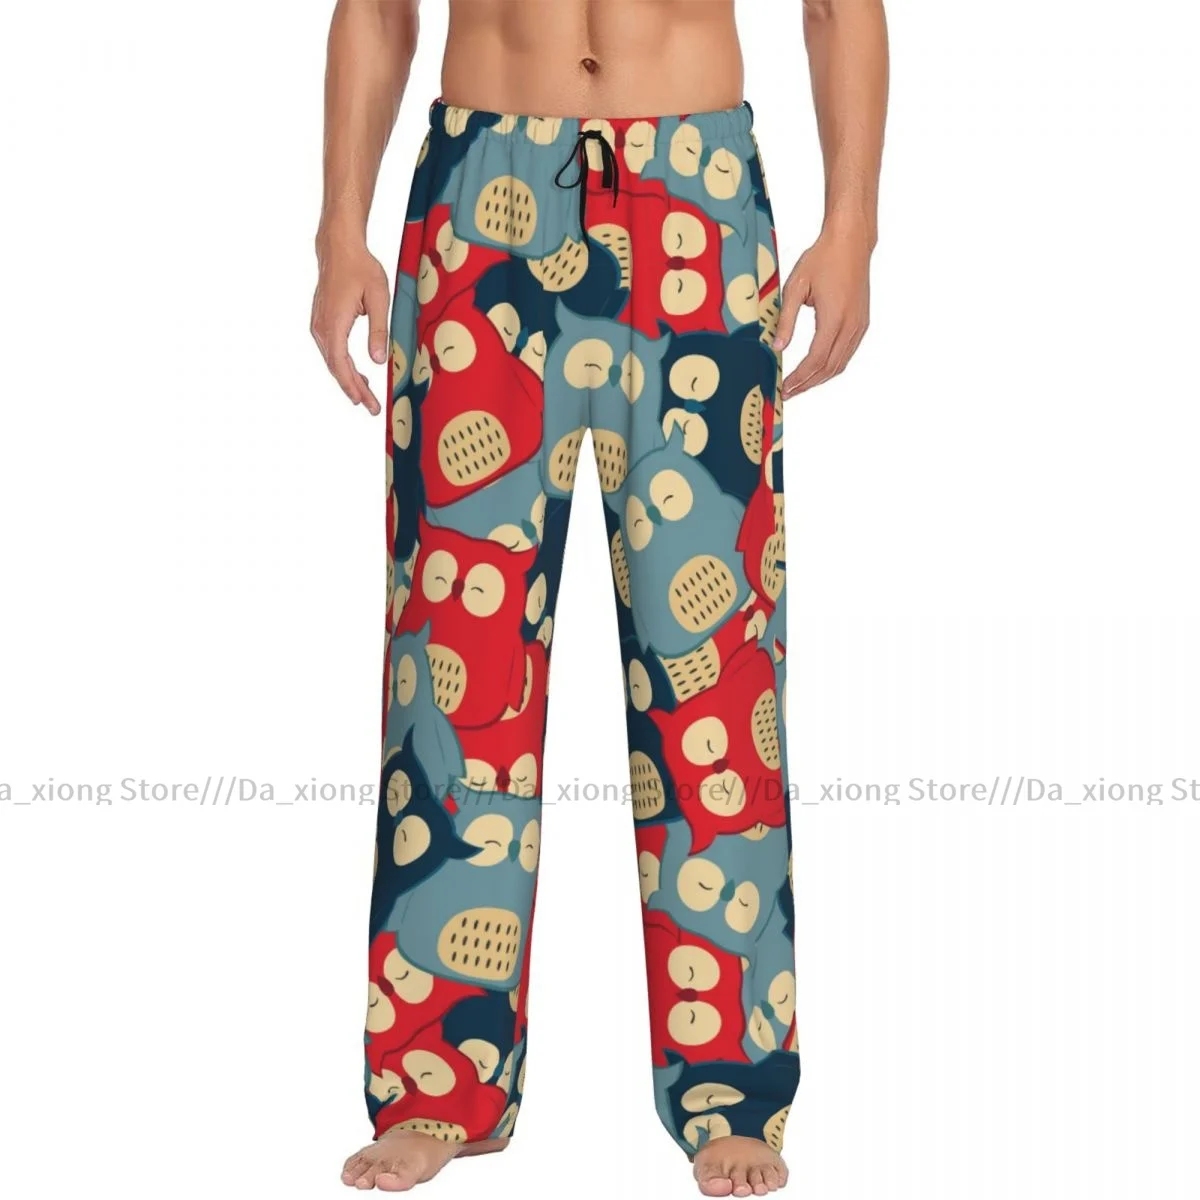 

Men's Sleepwear Loose Sleep Pants Pajamas Cute Animal Big Eye Owl Red Blue Pattern Long Lounge Bottoms Casual Homewear